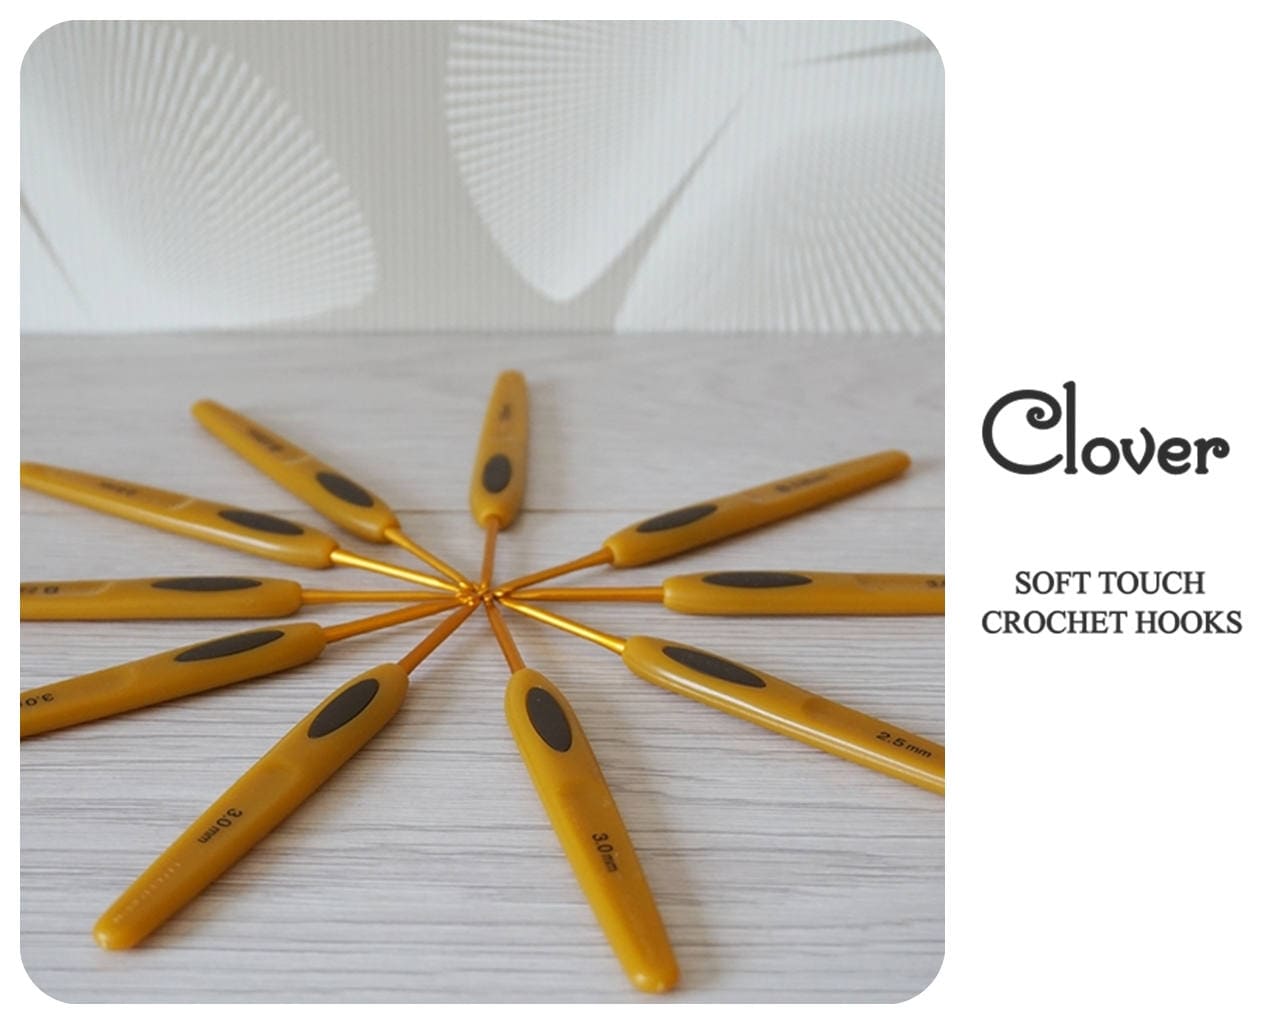 Clover Soft Touch Crochet Hooks Size C (2.75mm)